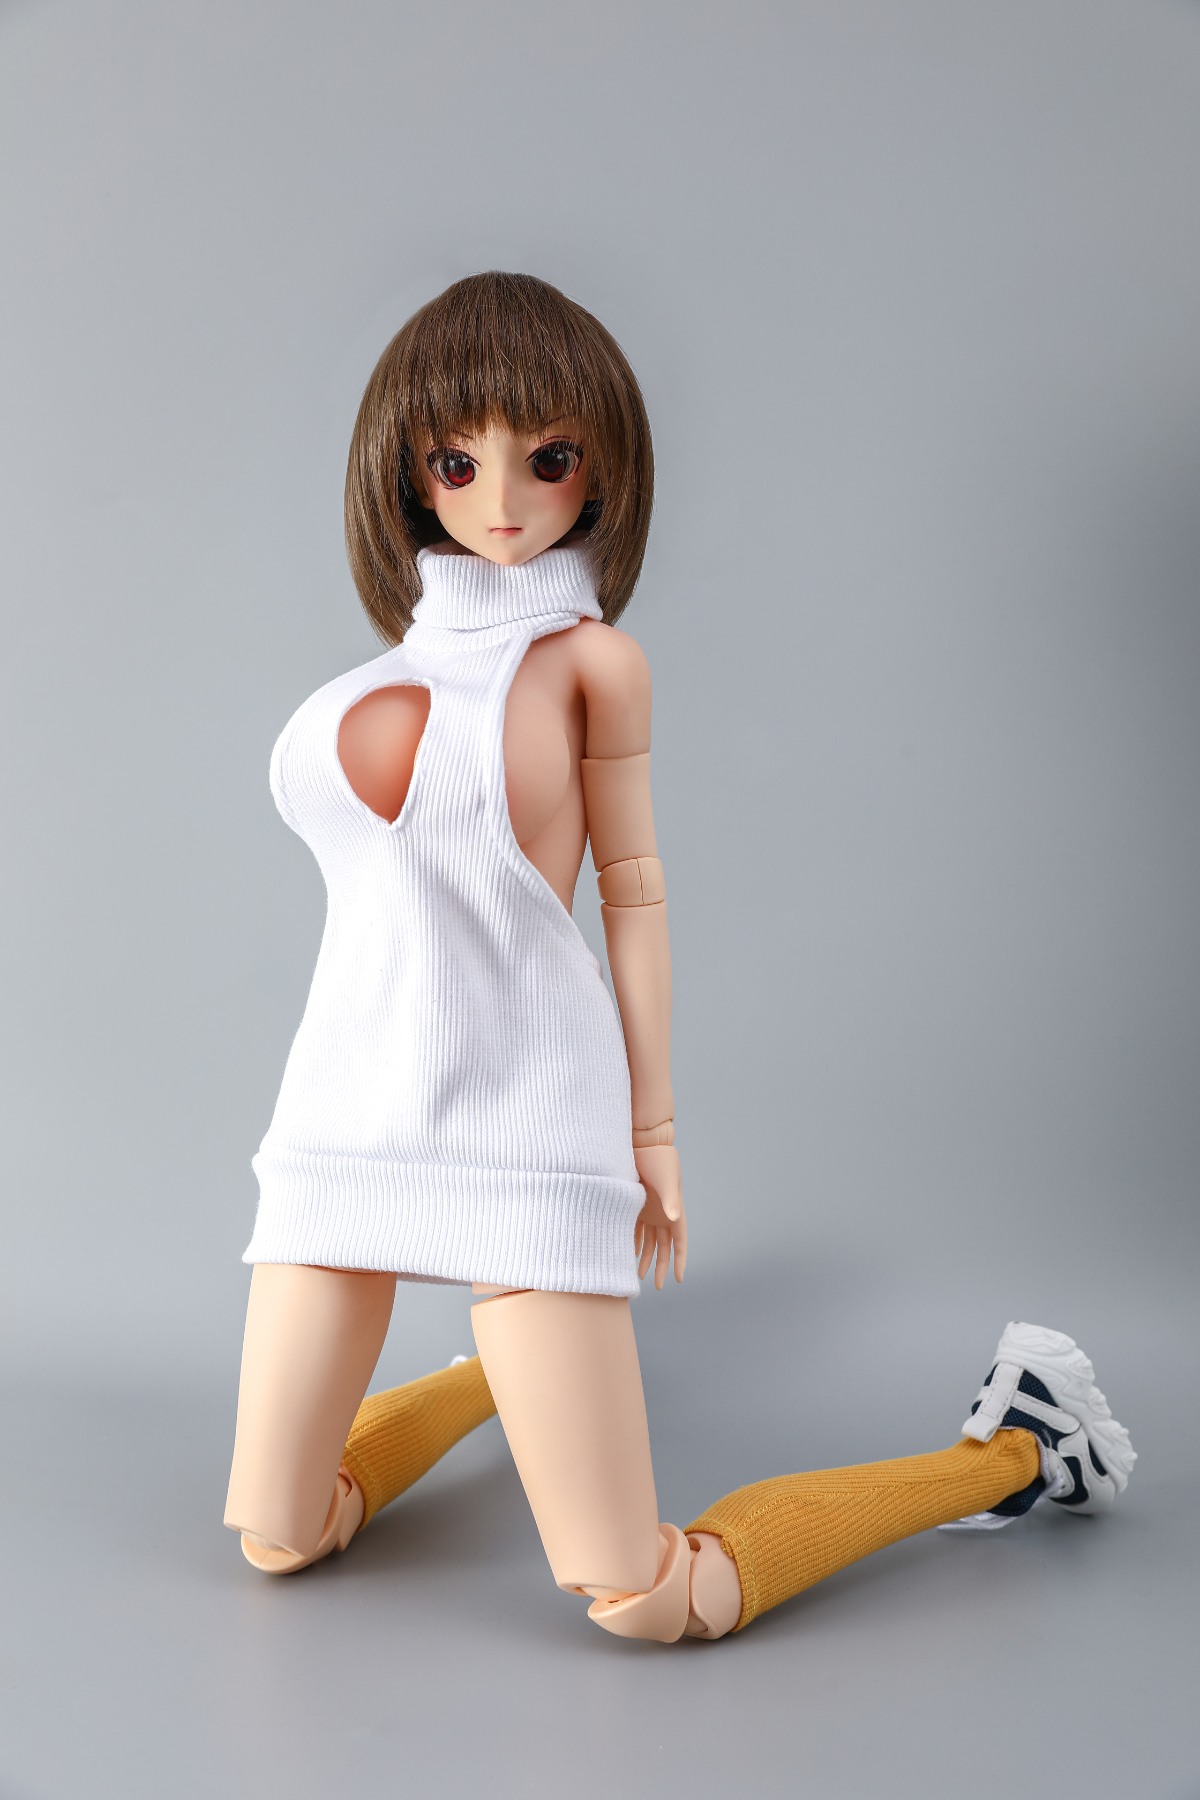 CLM 62cm mini silicone love doll - Vanya